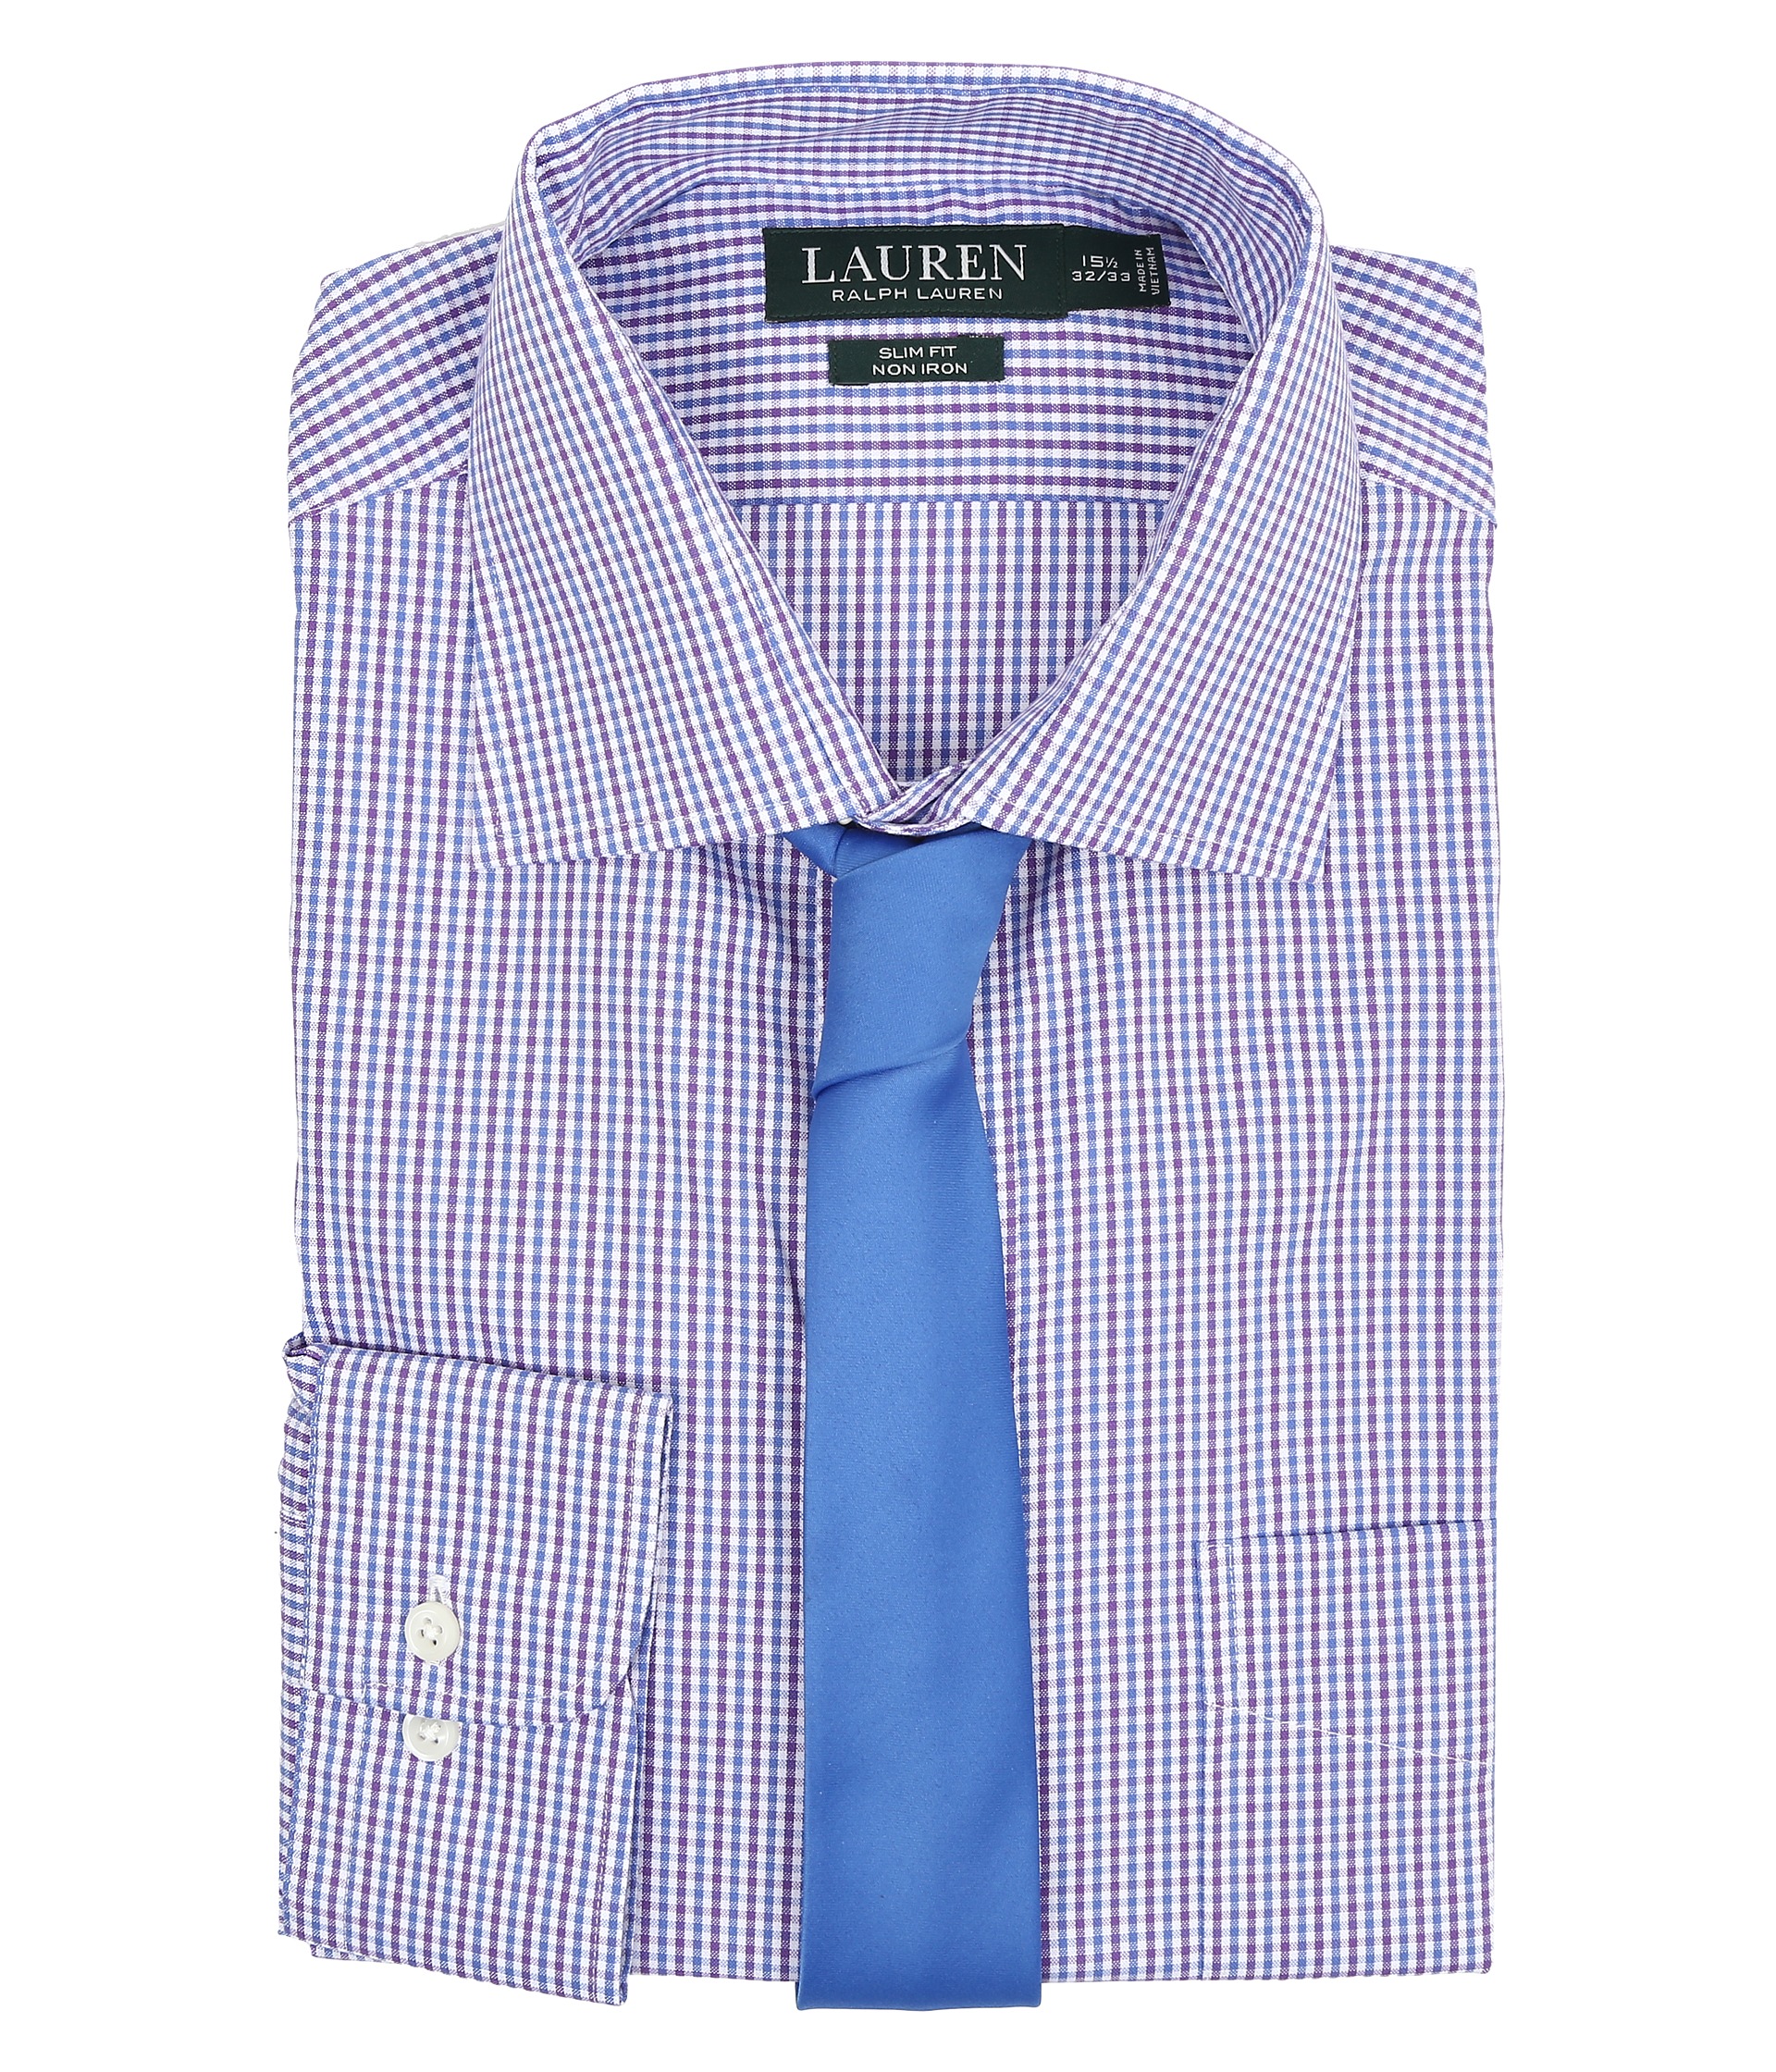 LAUREN Ralph Lauren Check Spread Collar Slim Shirt White/Blue/Purple